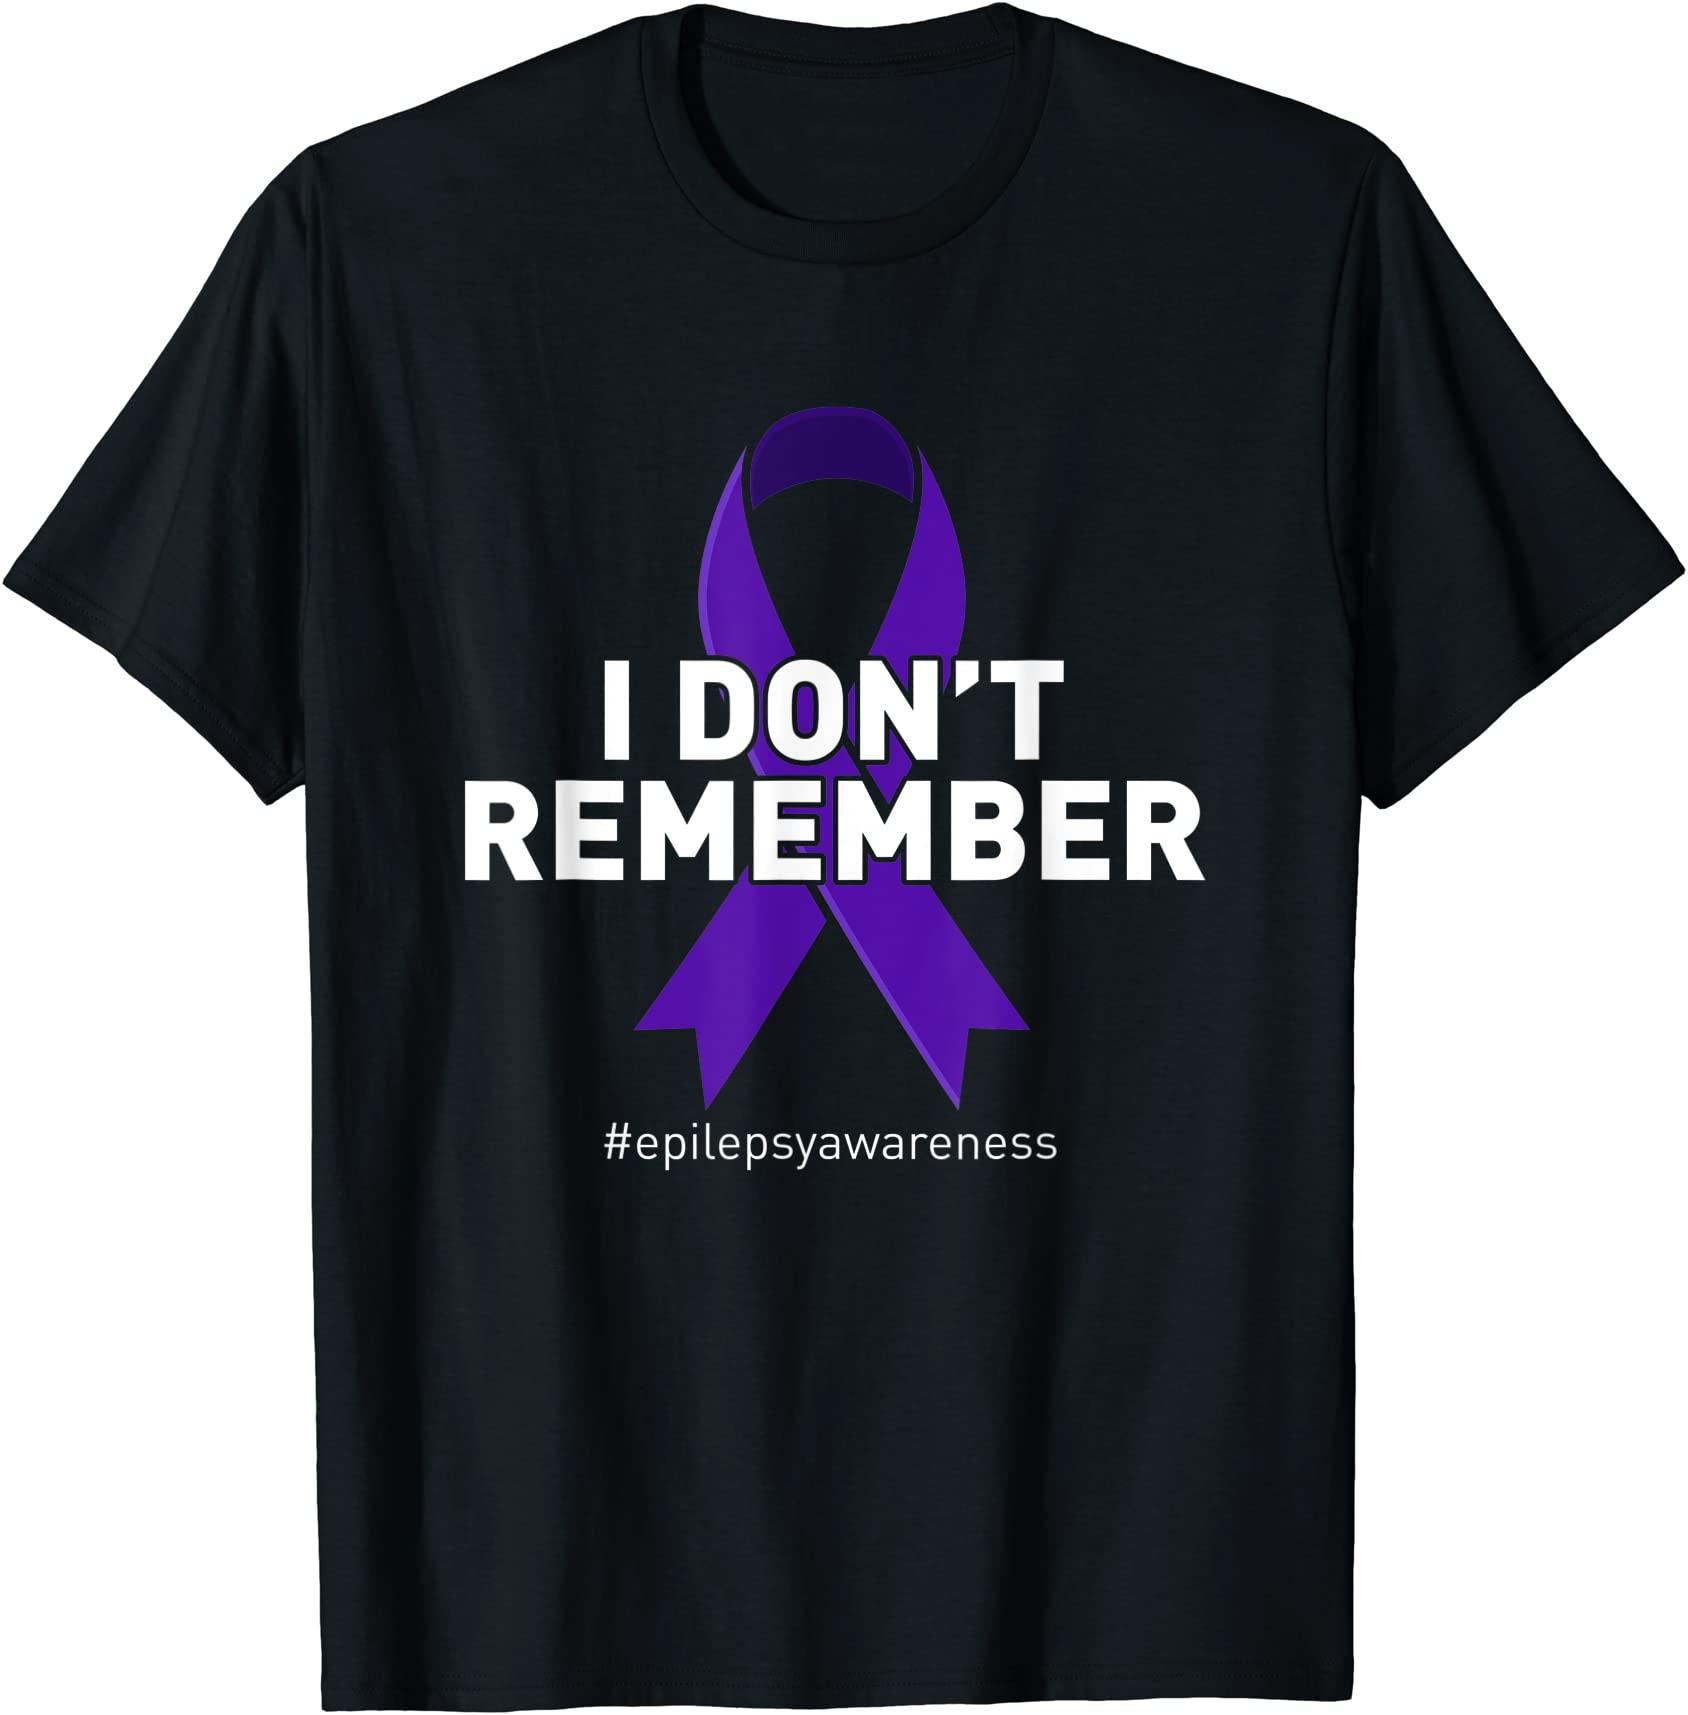 epilepsy awareness t shirt men - Buy t-shirt designs